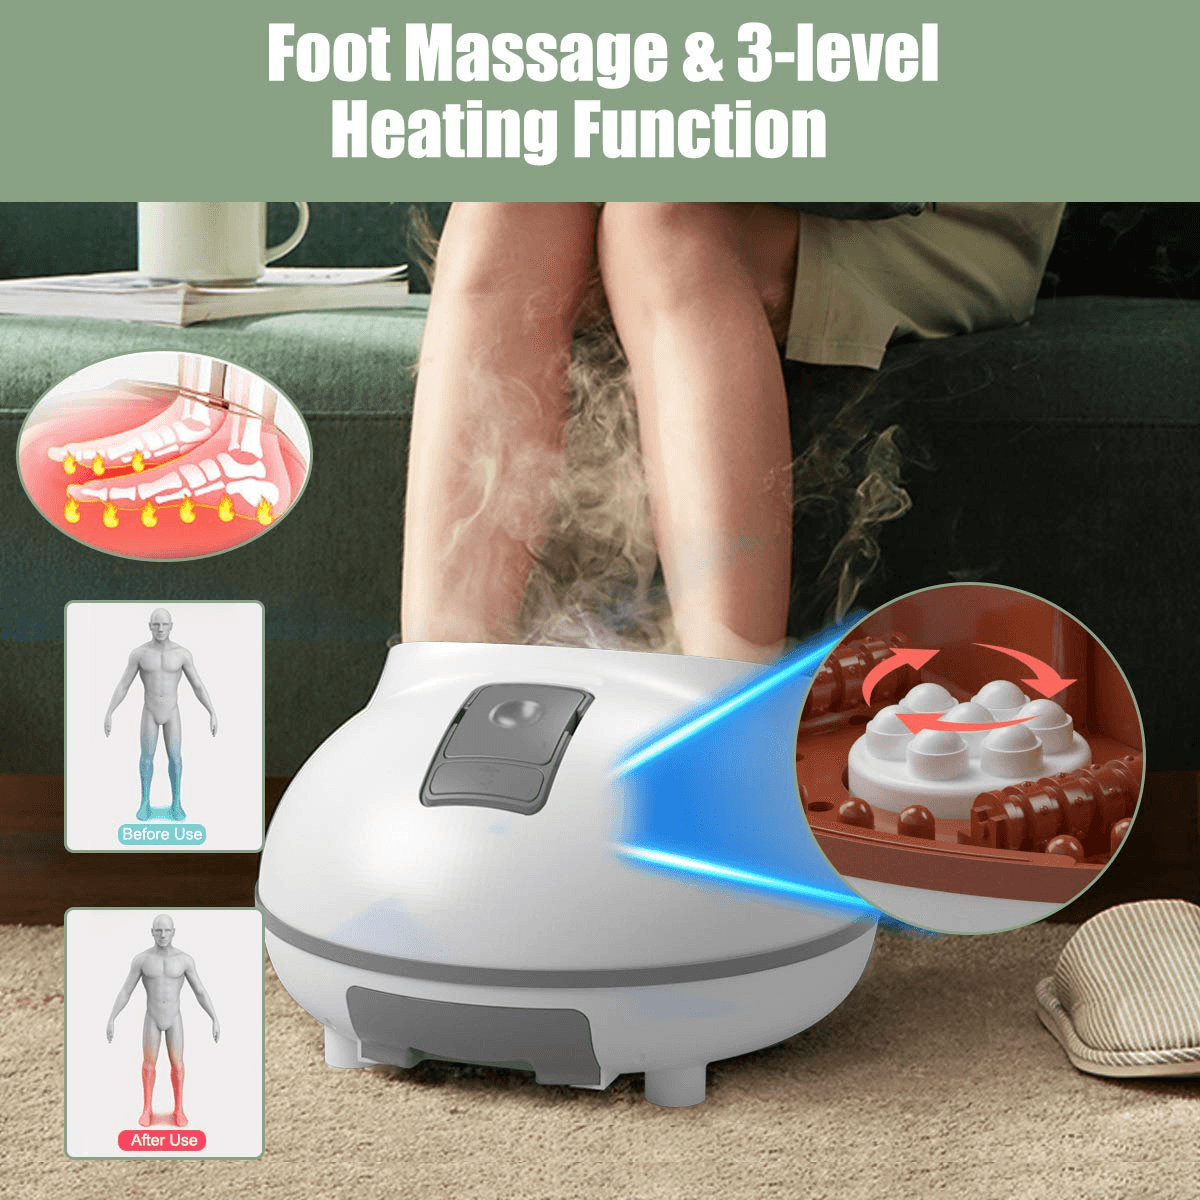 Giantex Steam Foot Spa Bath Massager w/3 Heat Levels, Pedicure Massage Rollers, Foot Spa Massager for Stress Relief (Brown/Gray) - Giantexus